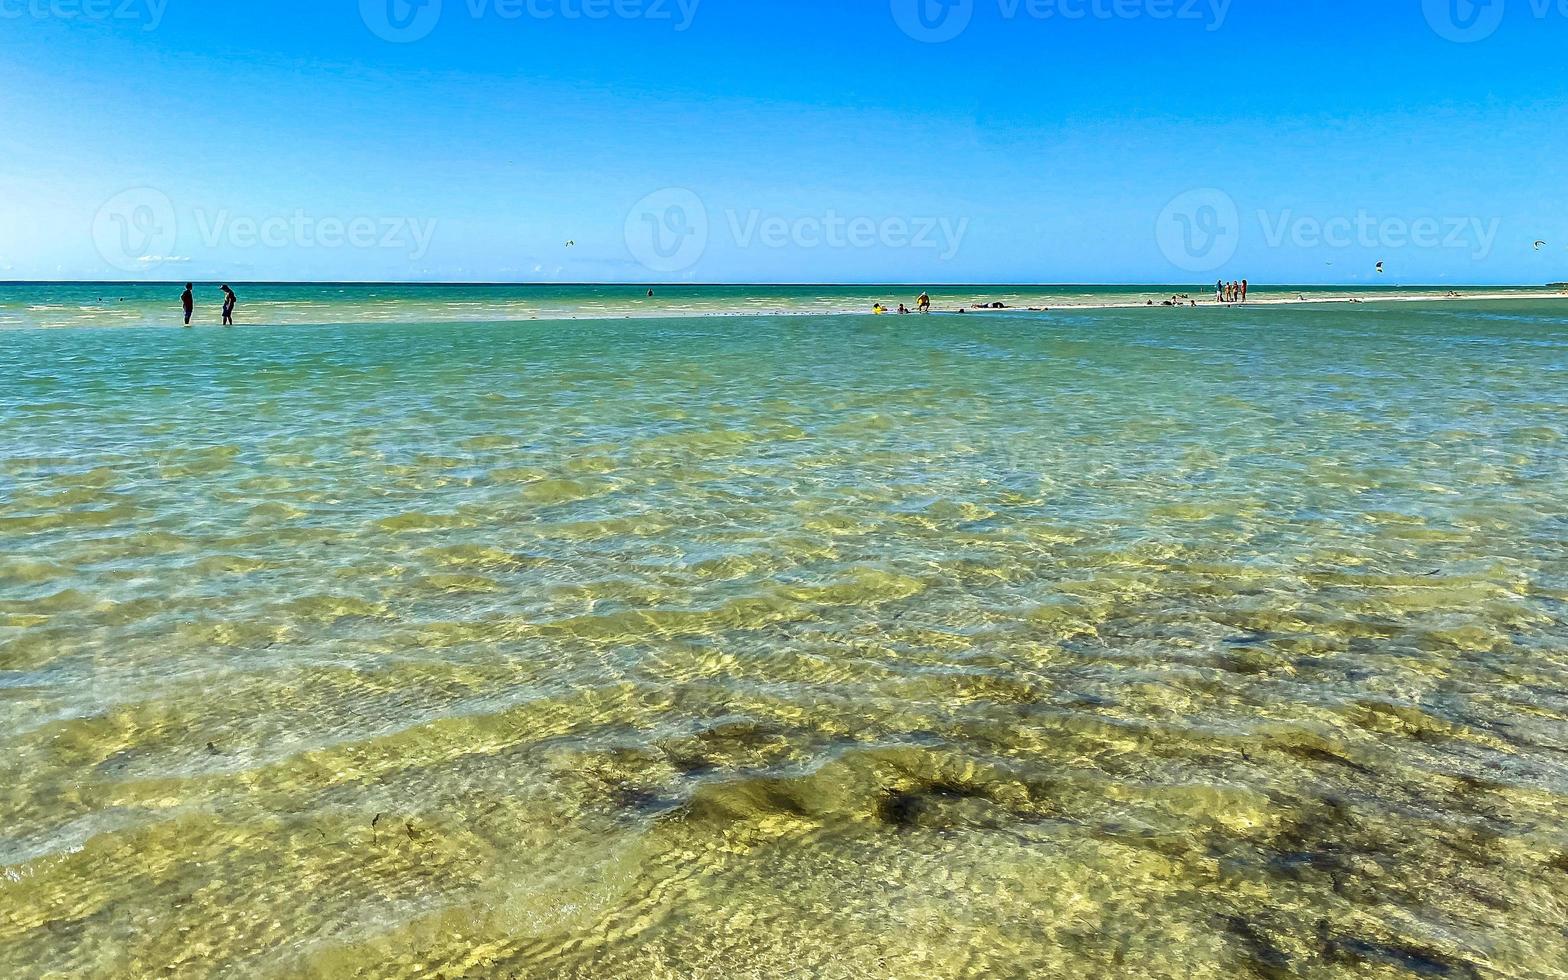 mooie holbox eiland strand zandbank panorama turquoise water mensen mexico. foto